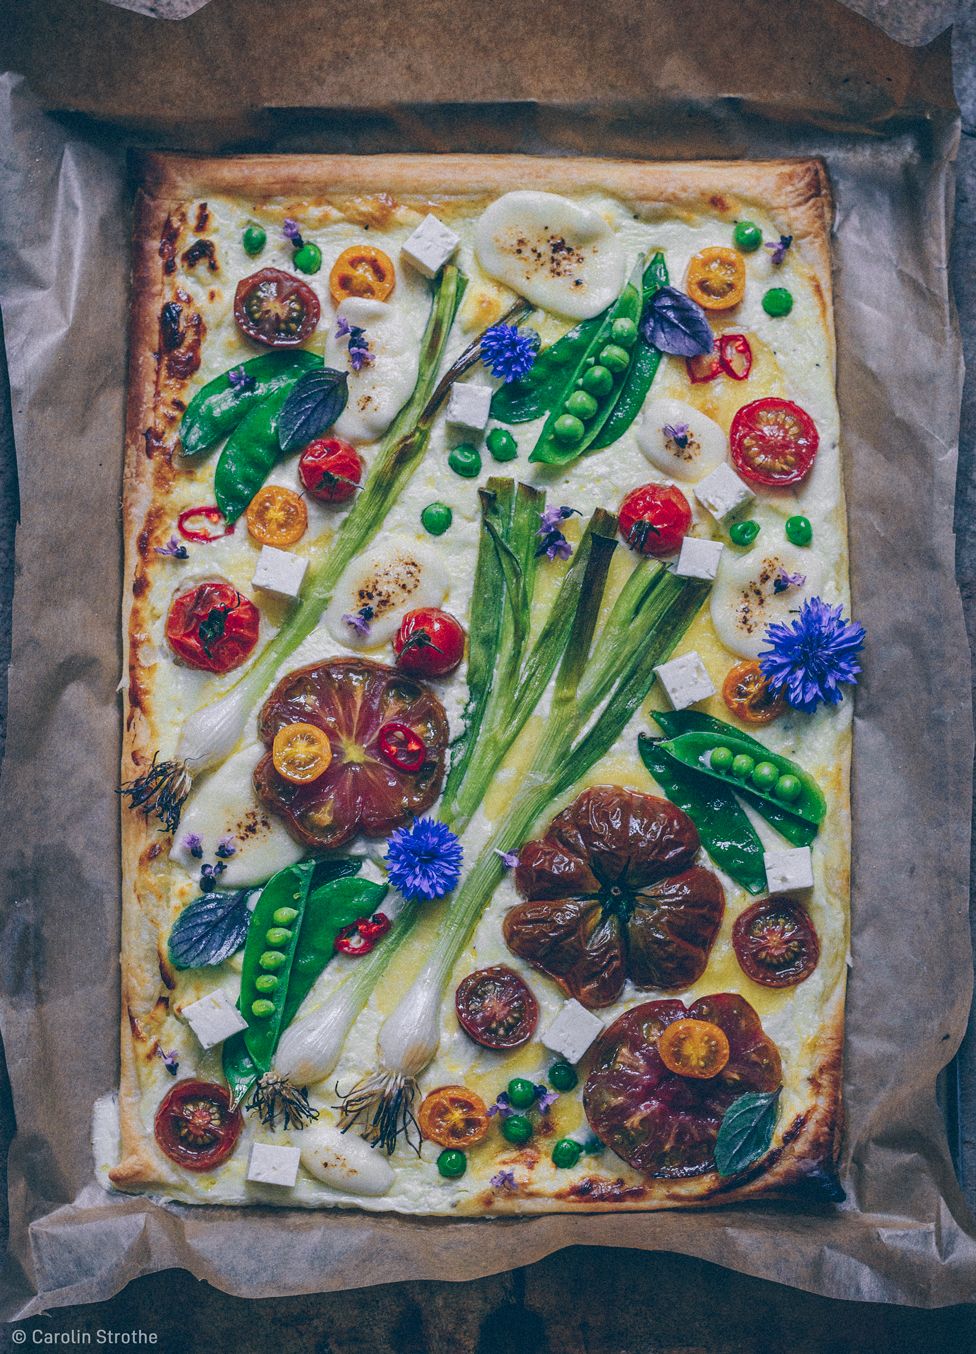 Colorful vegetable tart: